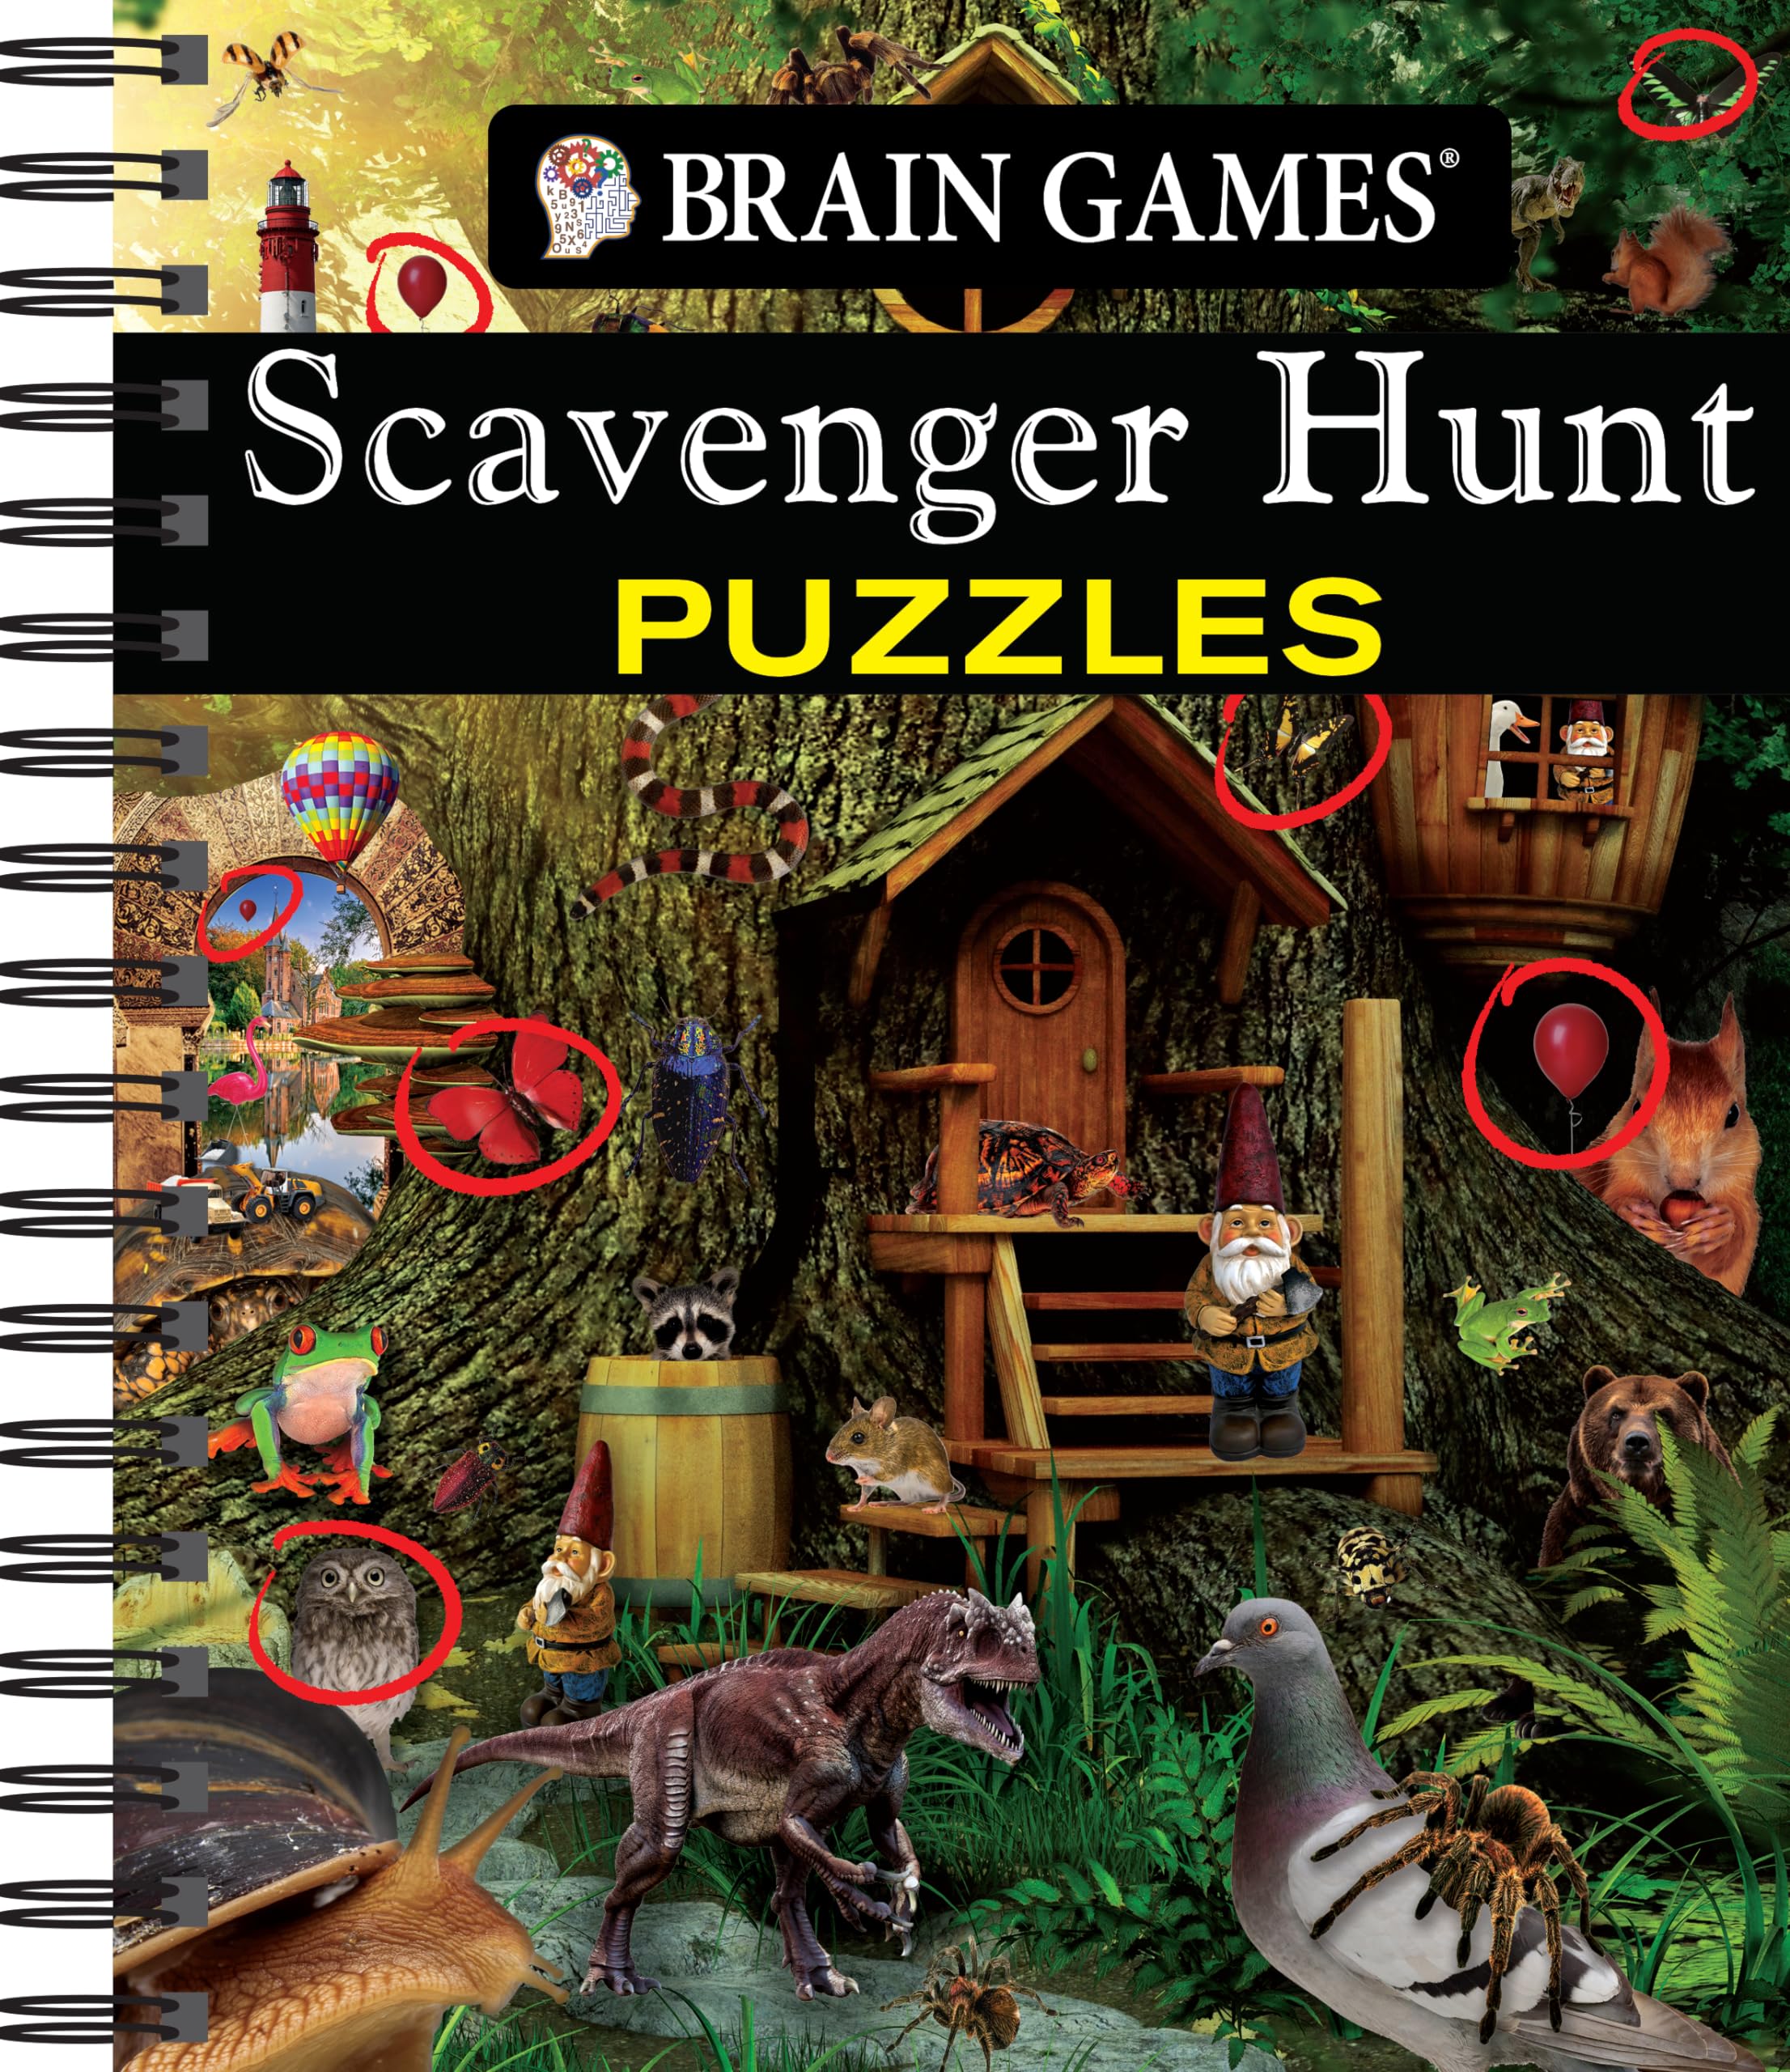 Brain Games - Scavenger Hunt Puzzles by Publications International Ltd